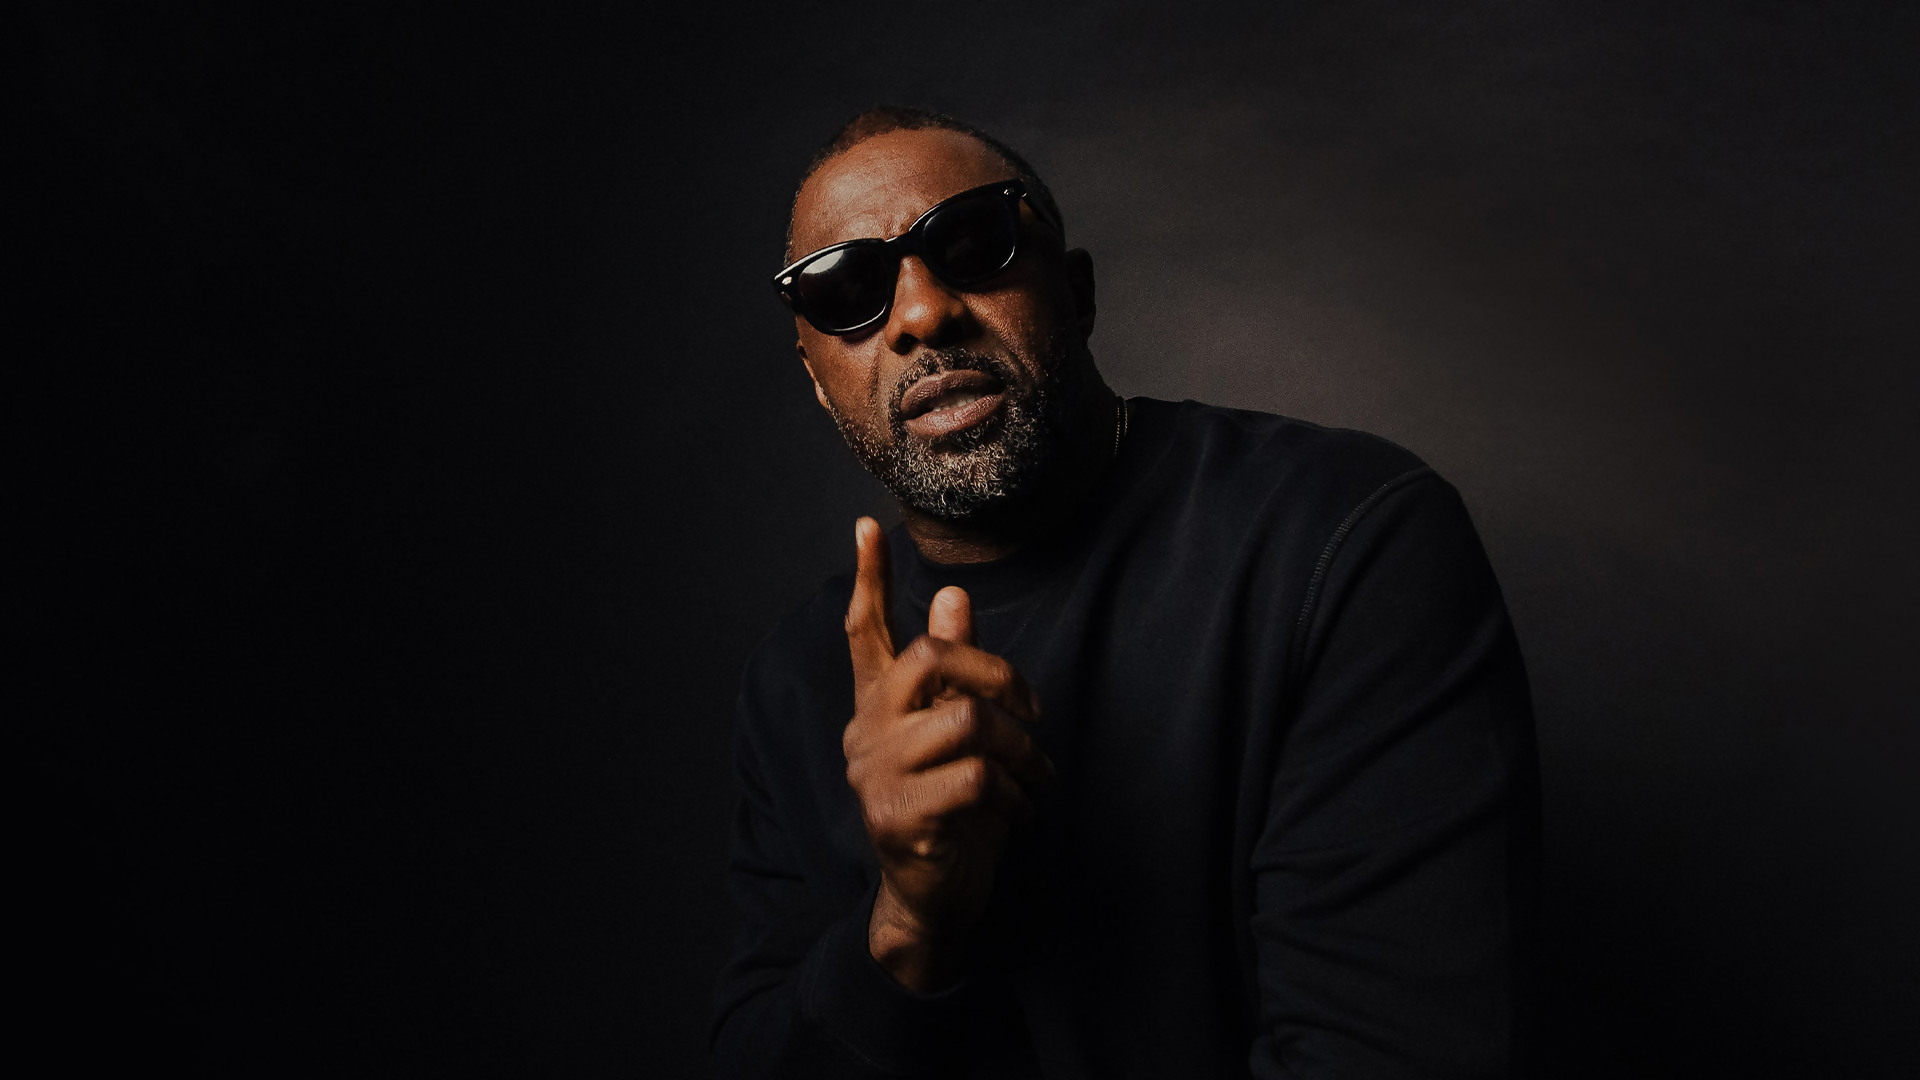 Idris Elba music, stats and more